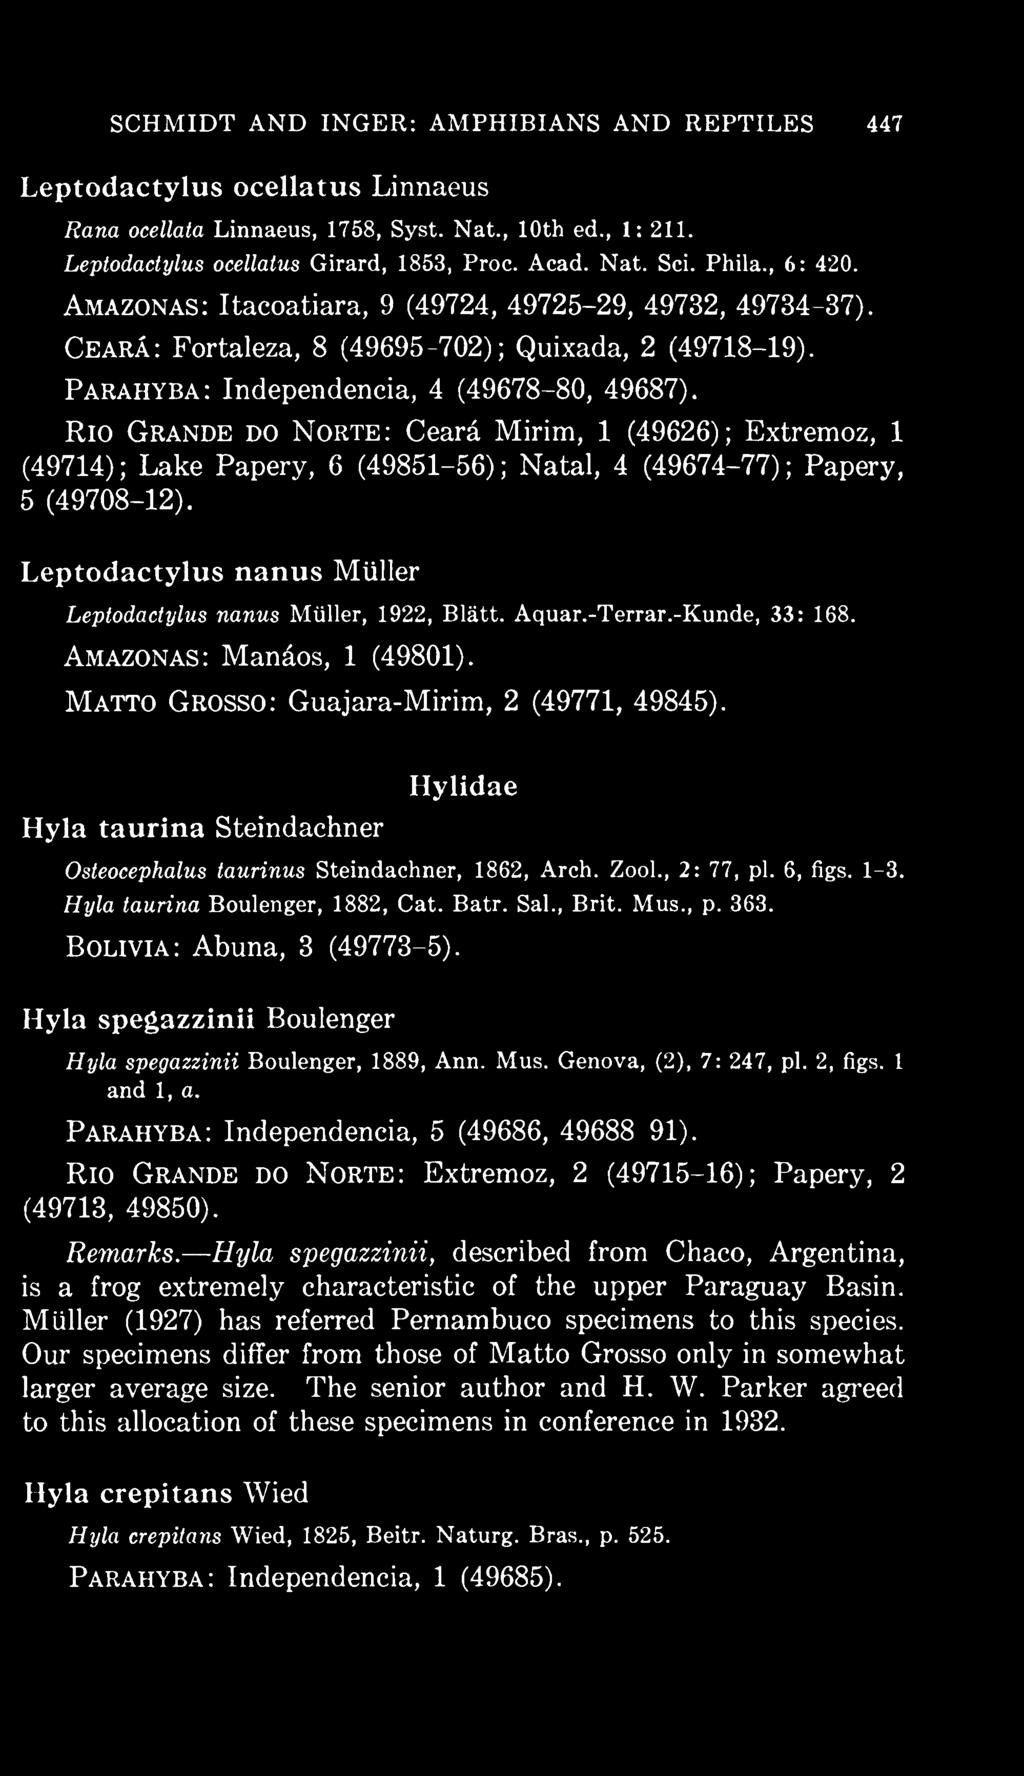 Hylidae Hyla taurina Steindachner Osteocephalus taurinus Steindachner, 1862, Arch. Zool., 2: 77, pi. 6, figs. 1-3. Hyla taurina Boulenger, 1882, Cat. Batr. Sal., Brit. Mus., p. 363.